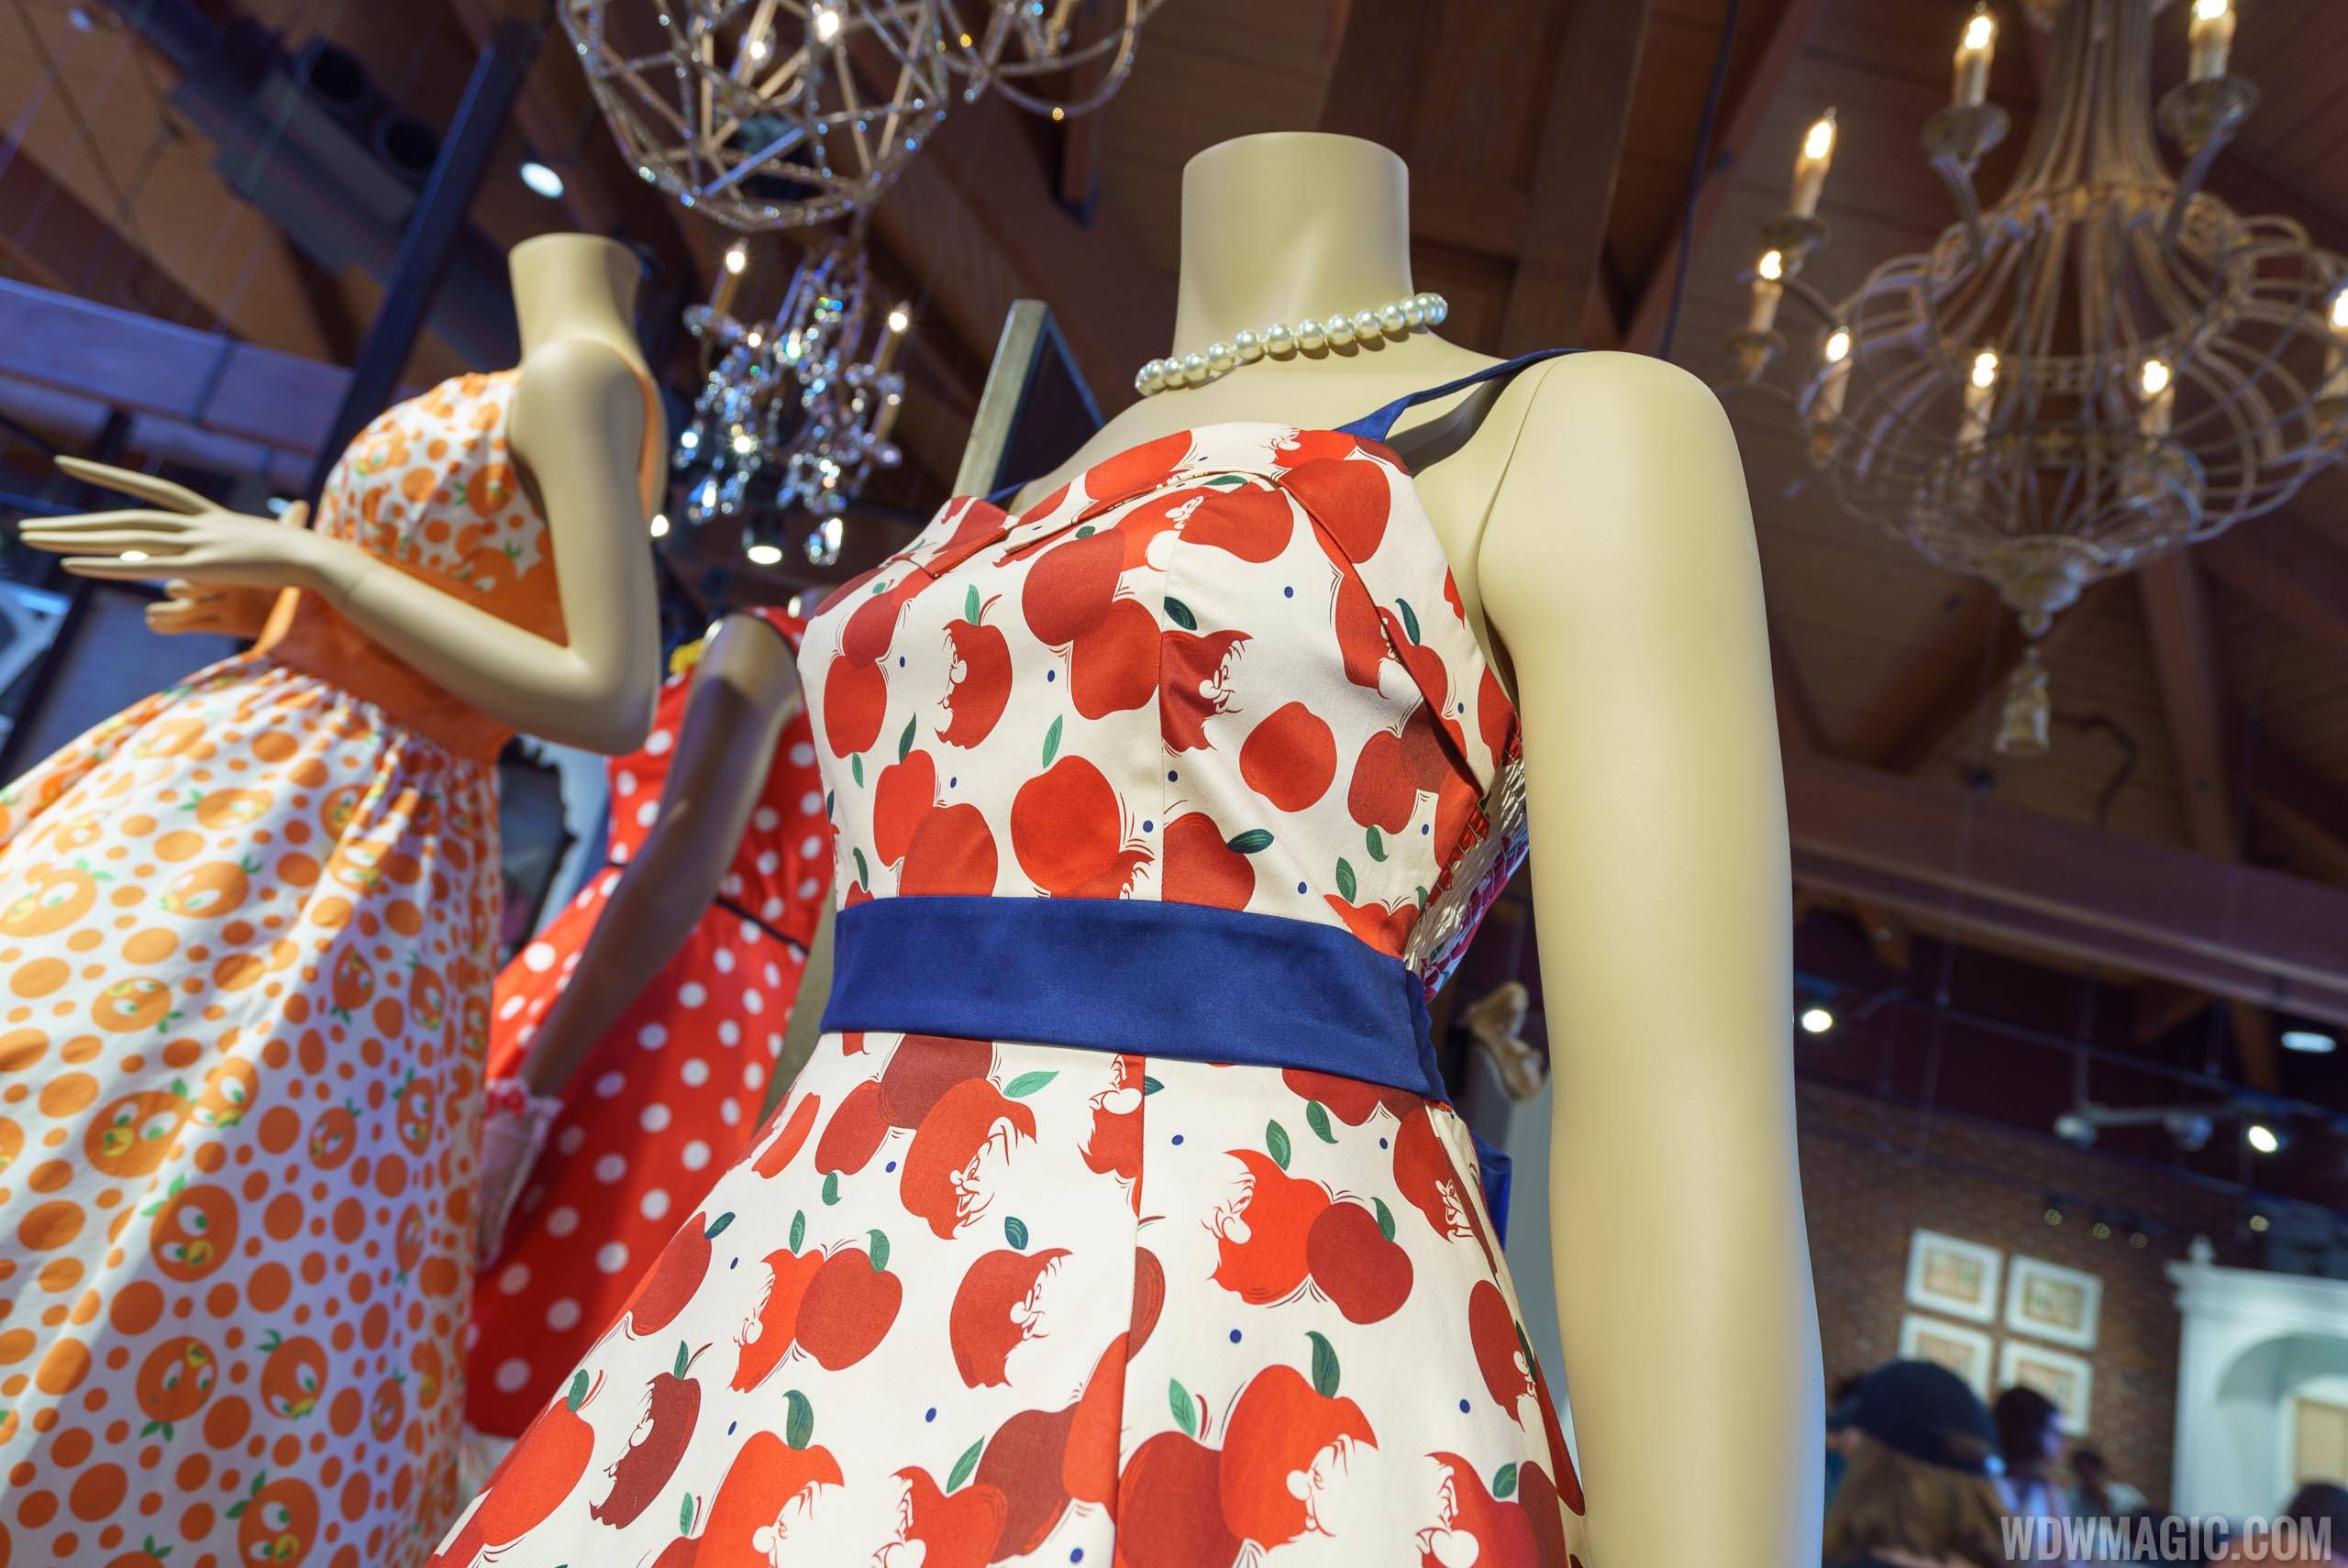 The Dress Shop on Cherry Tree Lane - Snow White dress